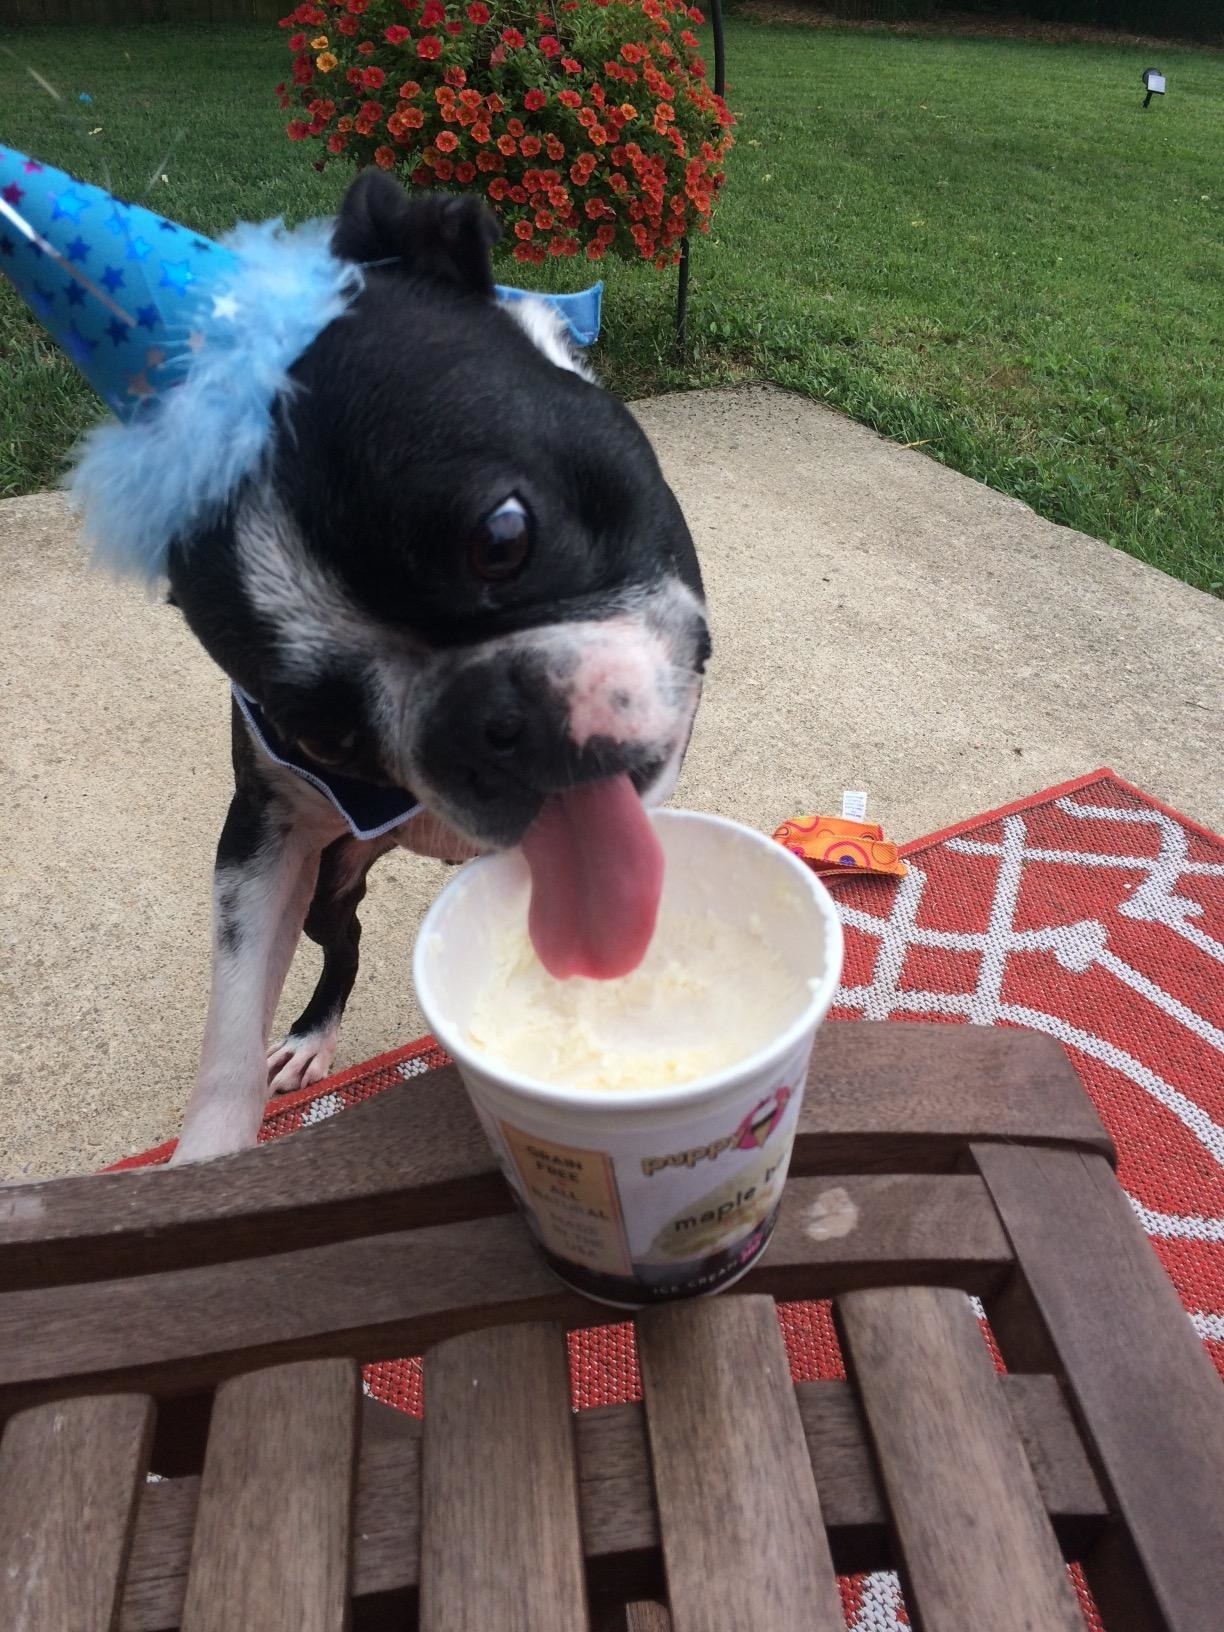 A dog licks the ice cream from the carton